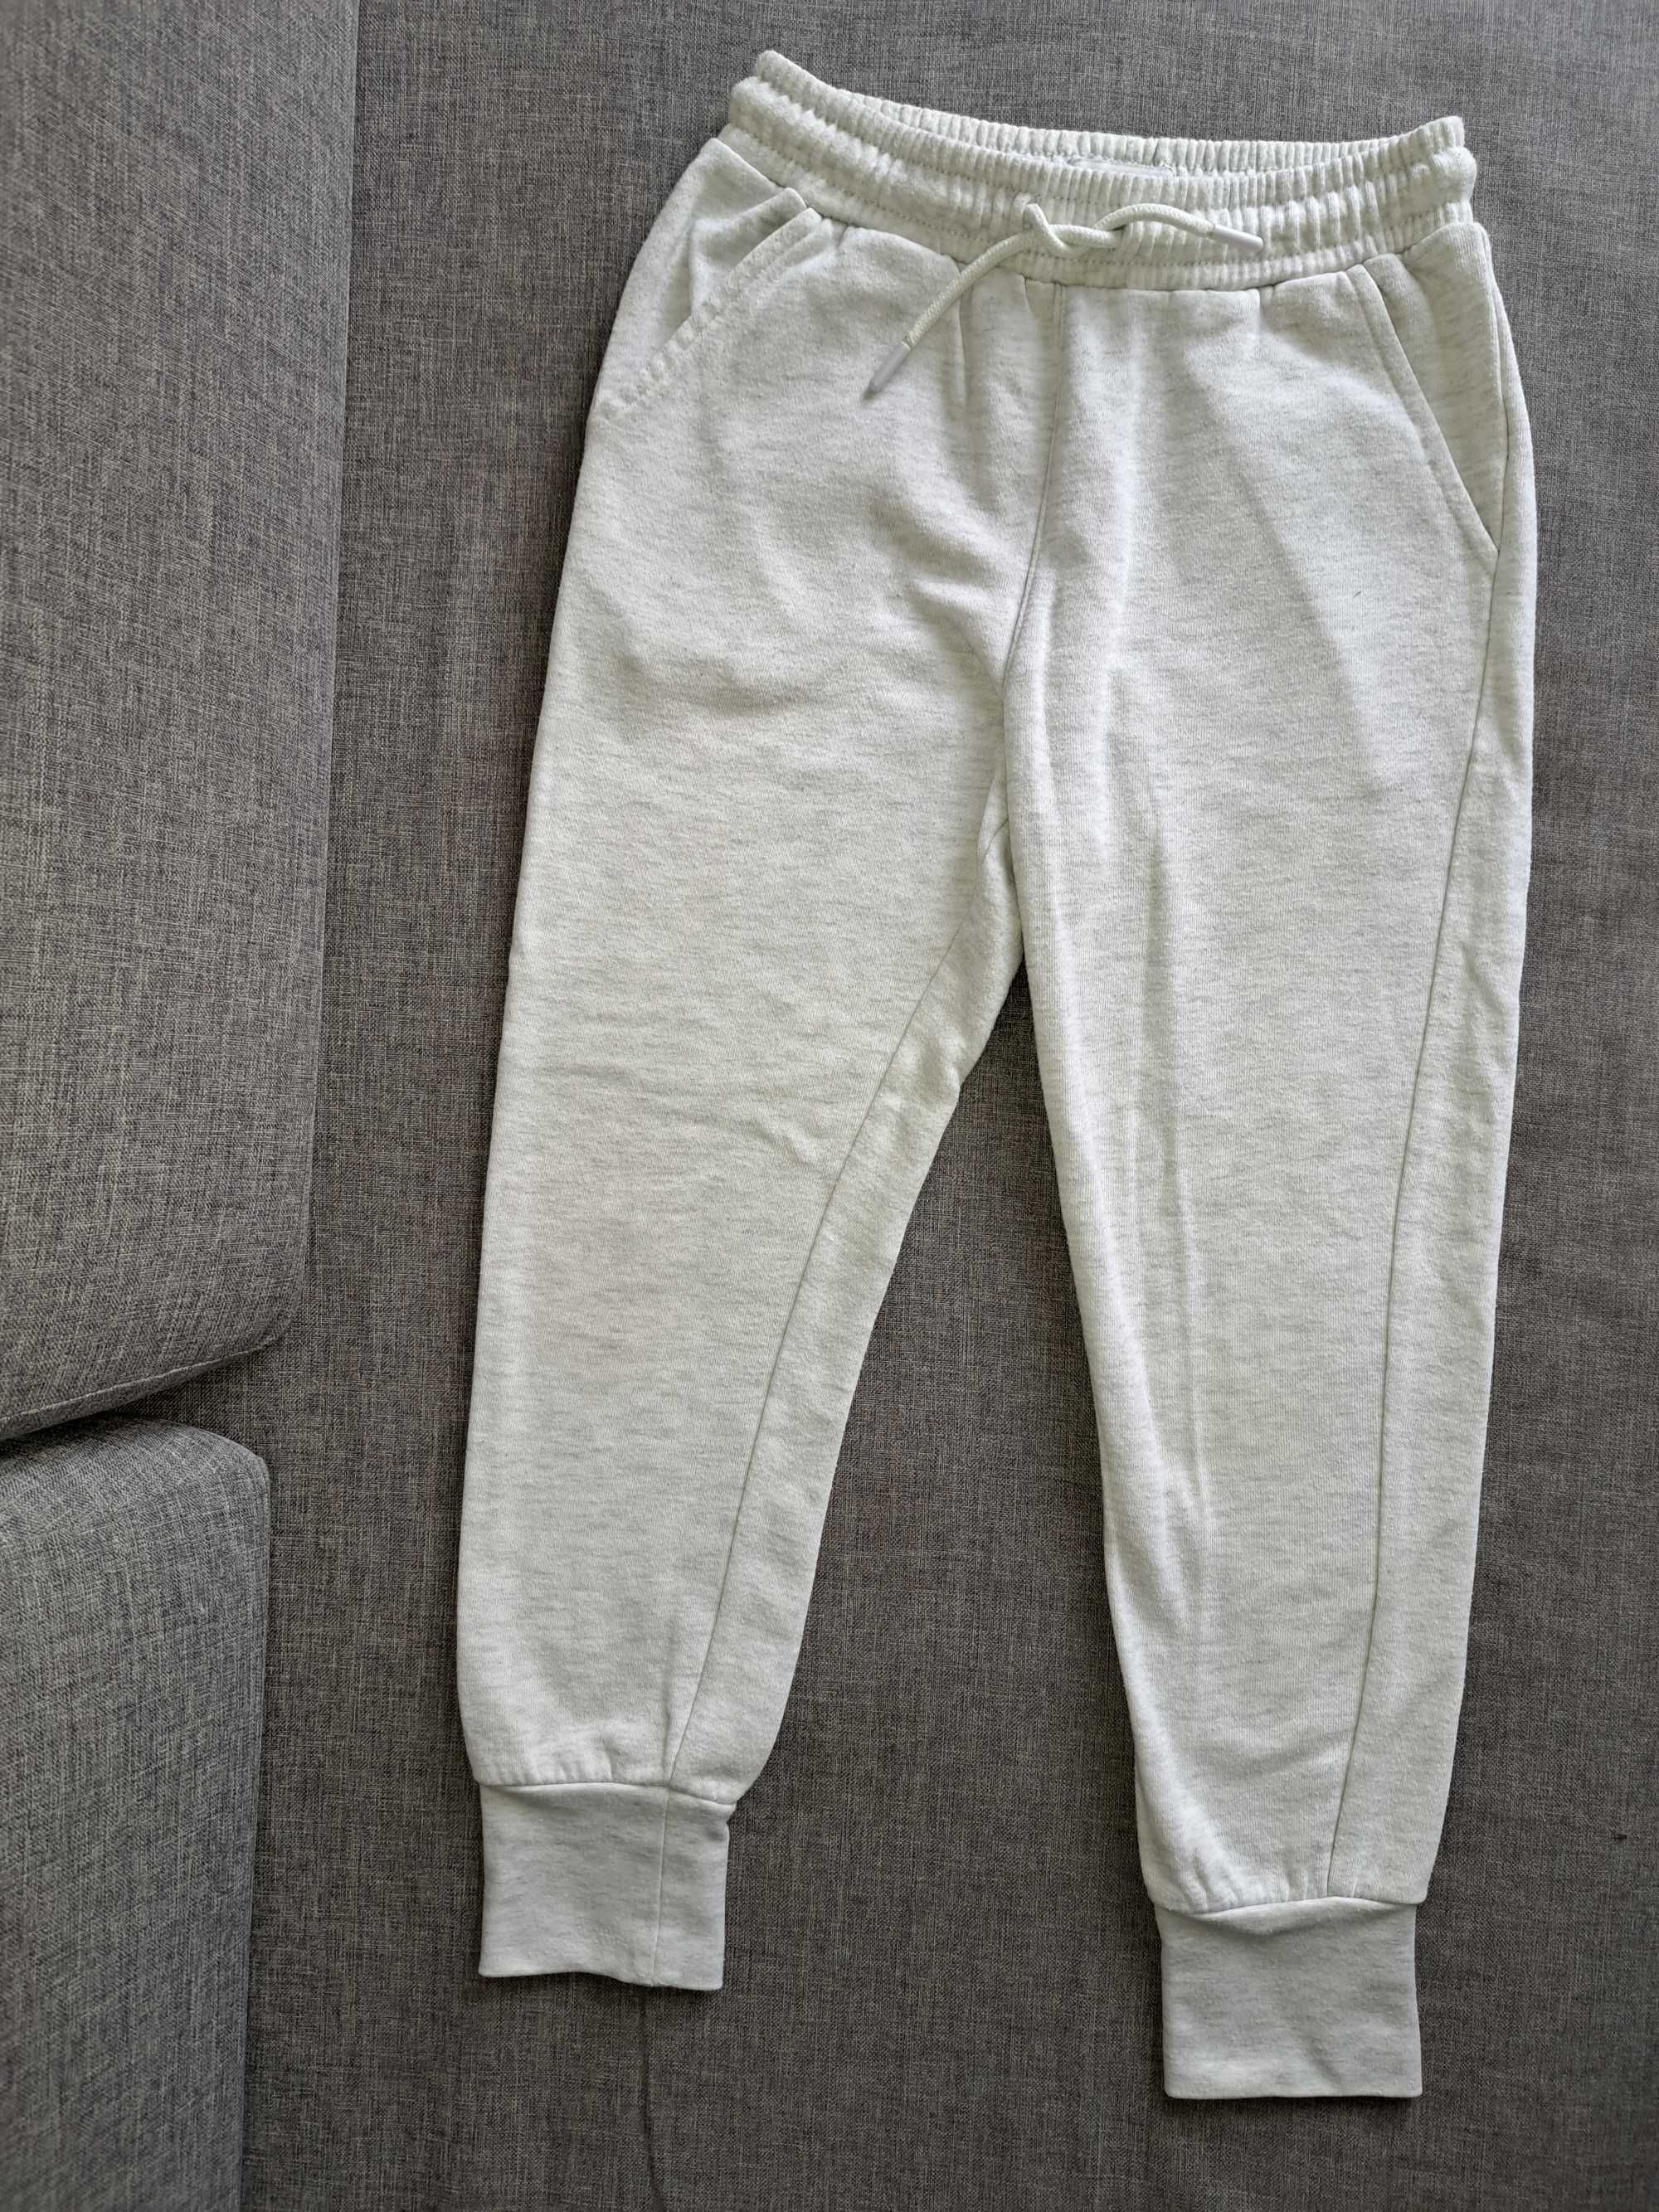 Spodnie dresowe ocieplane dresy jogger Reserved 134 cm szare.